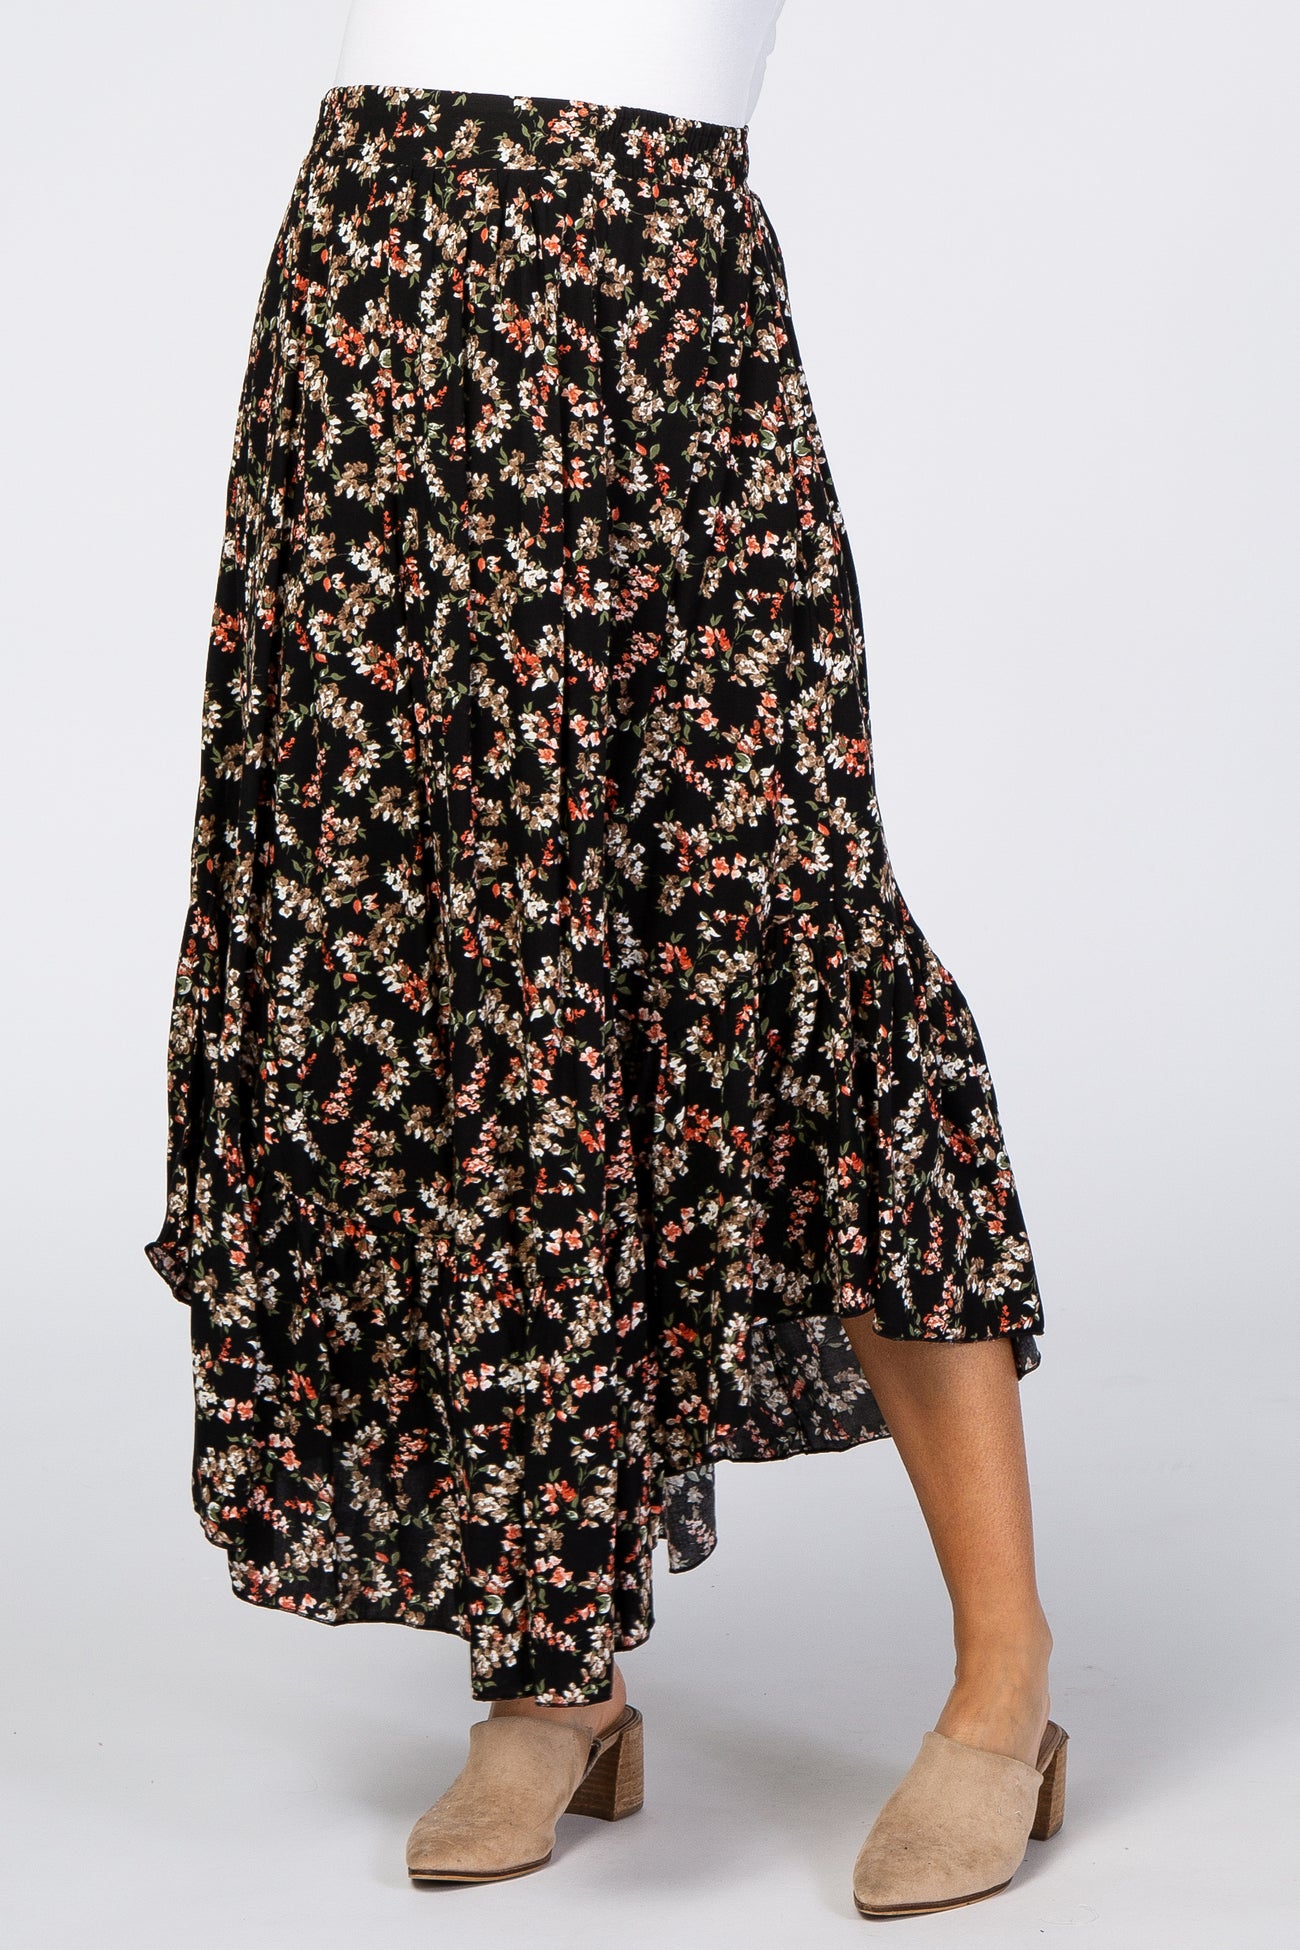 Black Floral Ruffle Maternity Skirt– PinkBlush